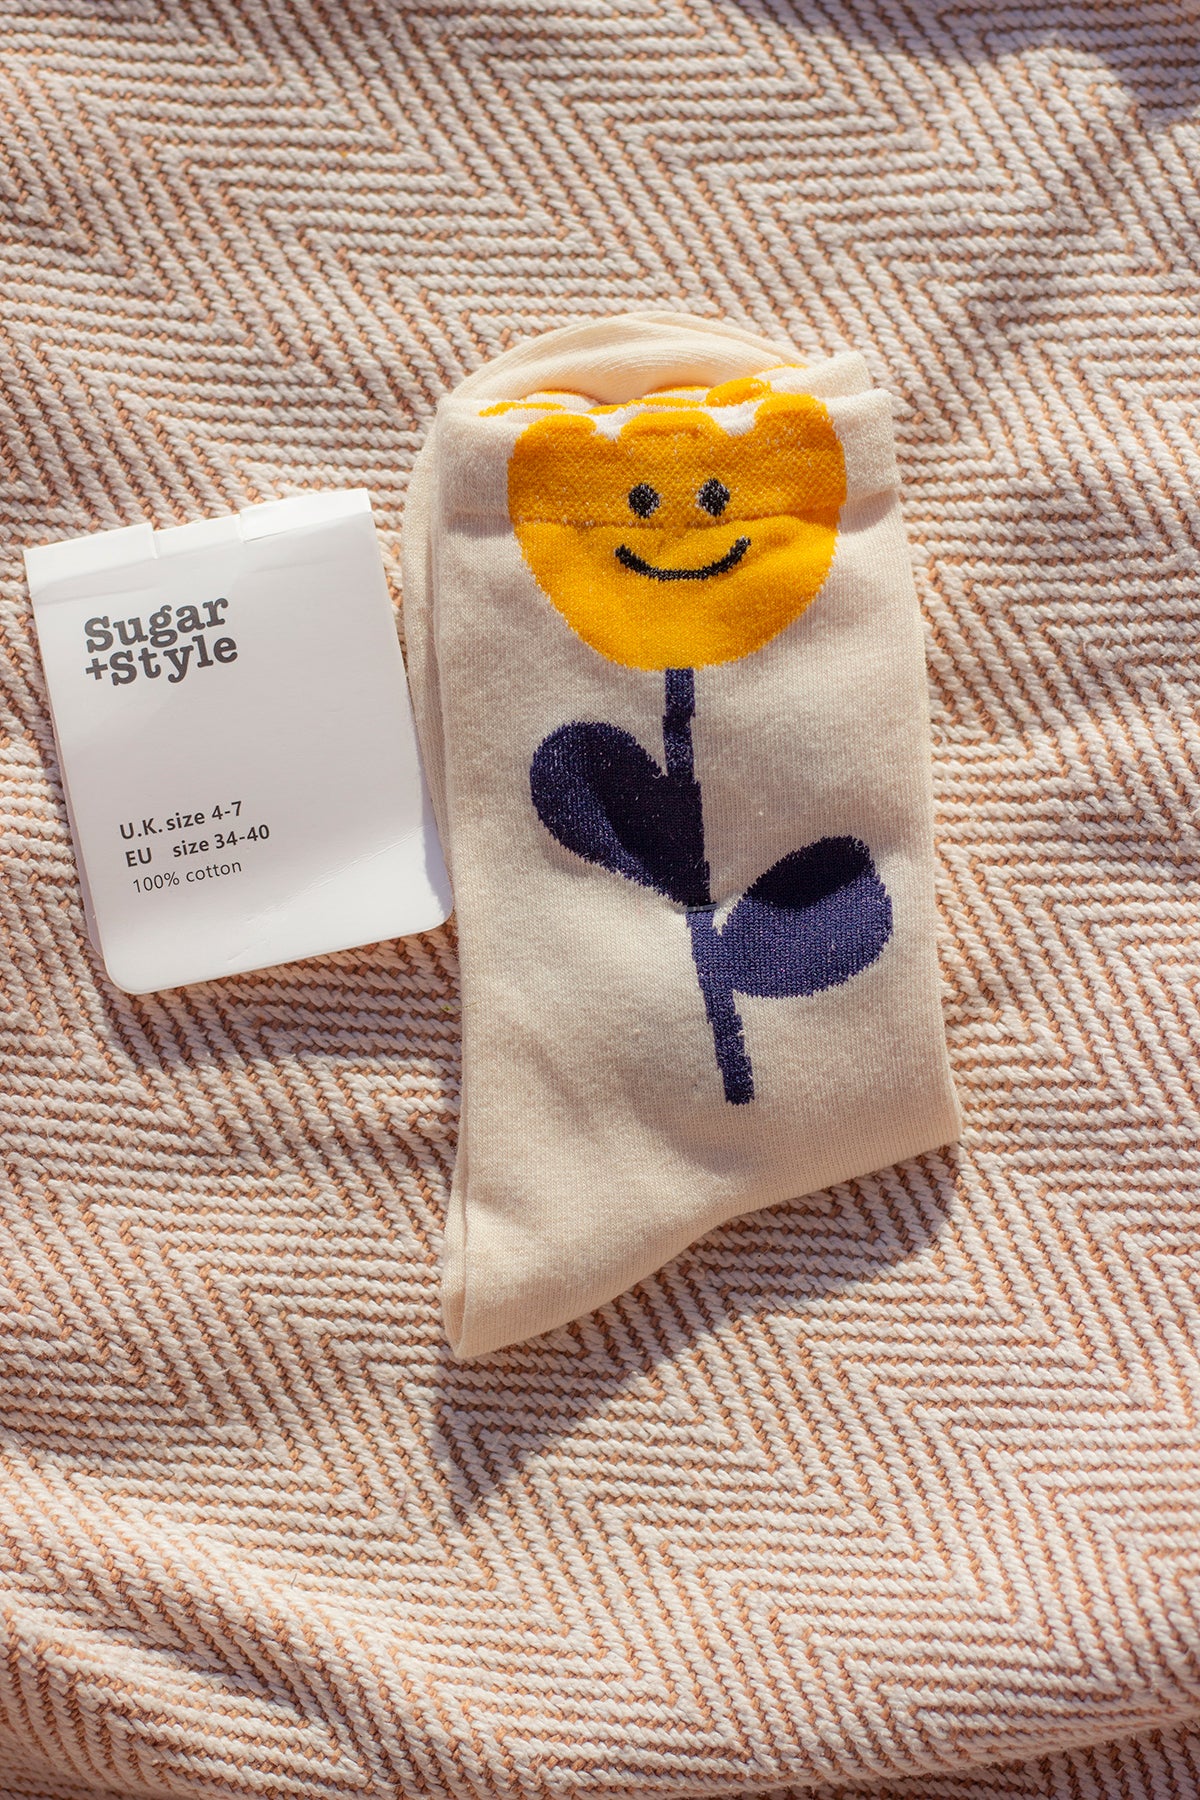 Flower Illustrated Ankle Top Socks - Sugar + Style